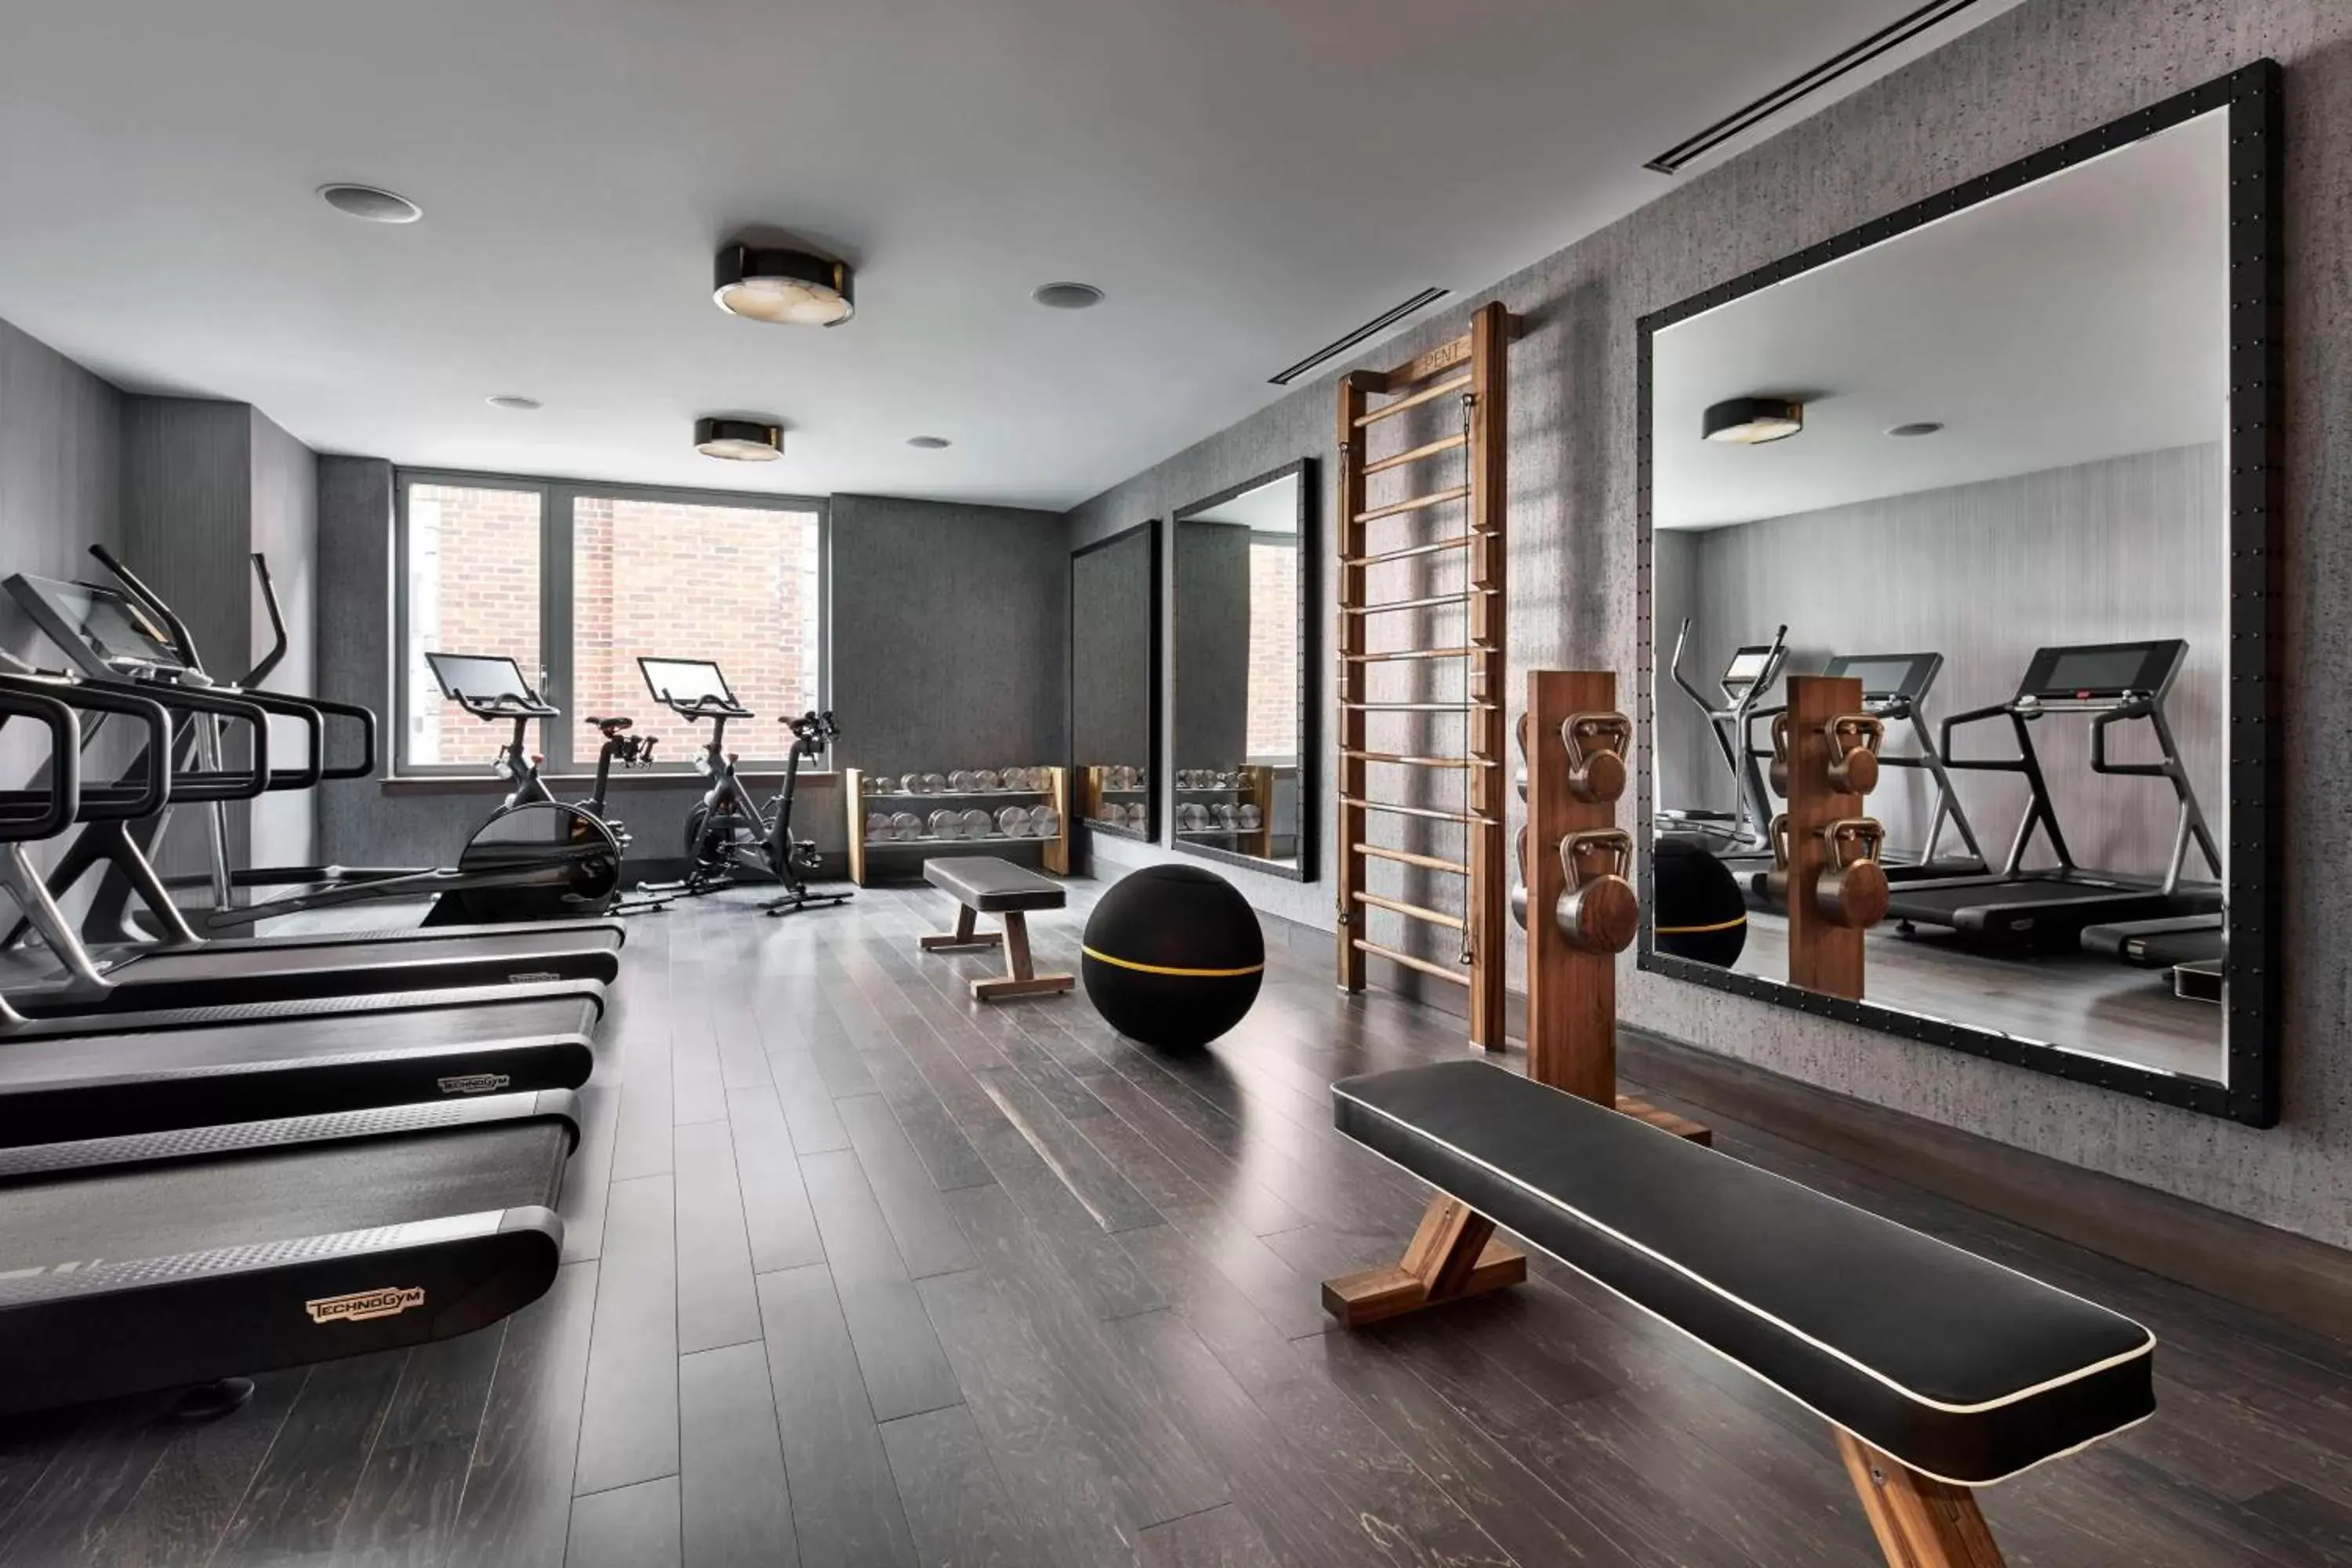 Fitness centre/facilities, Fitness Center/Facilities in The Ritz-Carlton Georgetown, Washington, D.C.